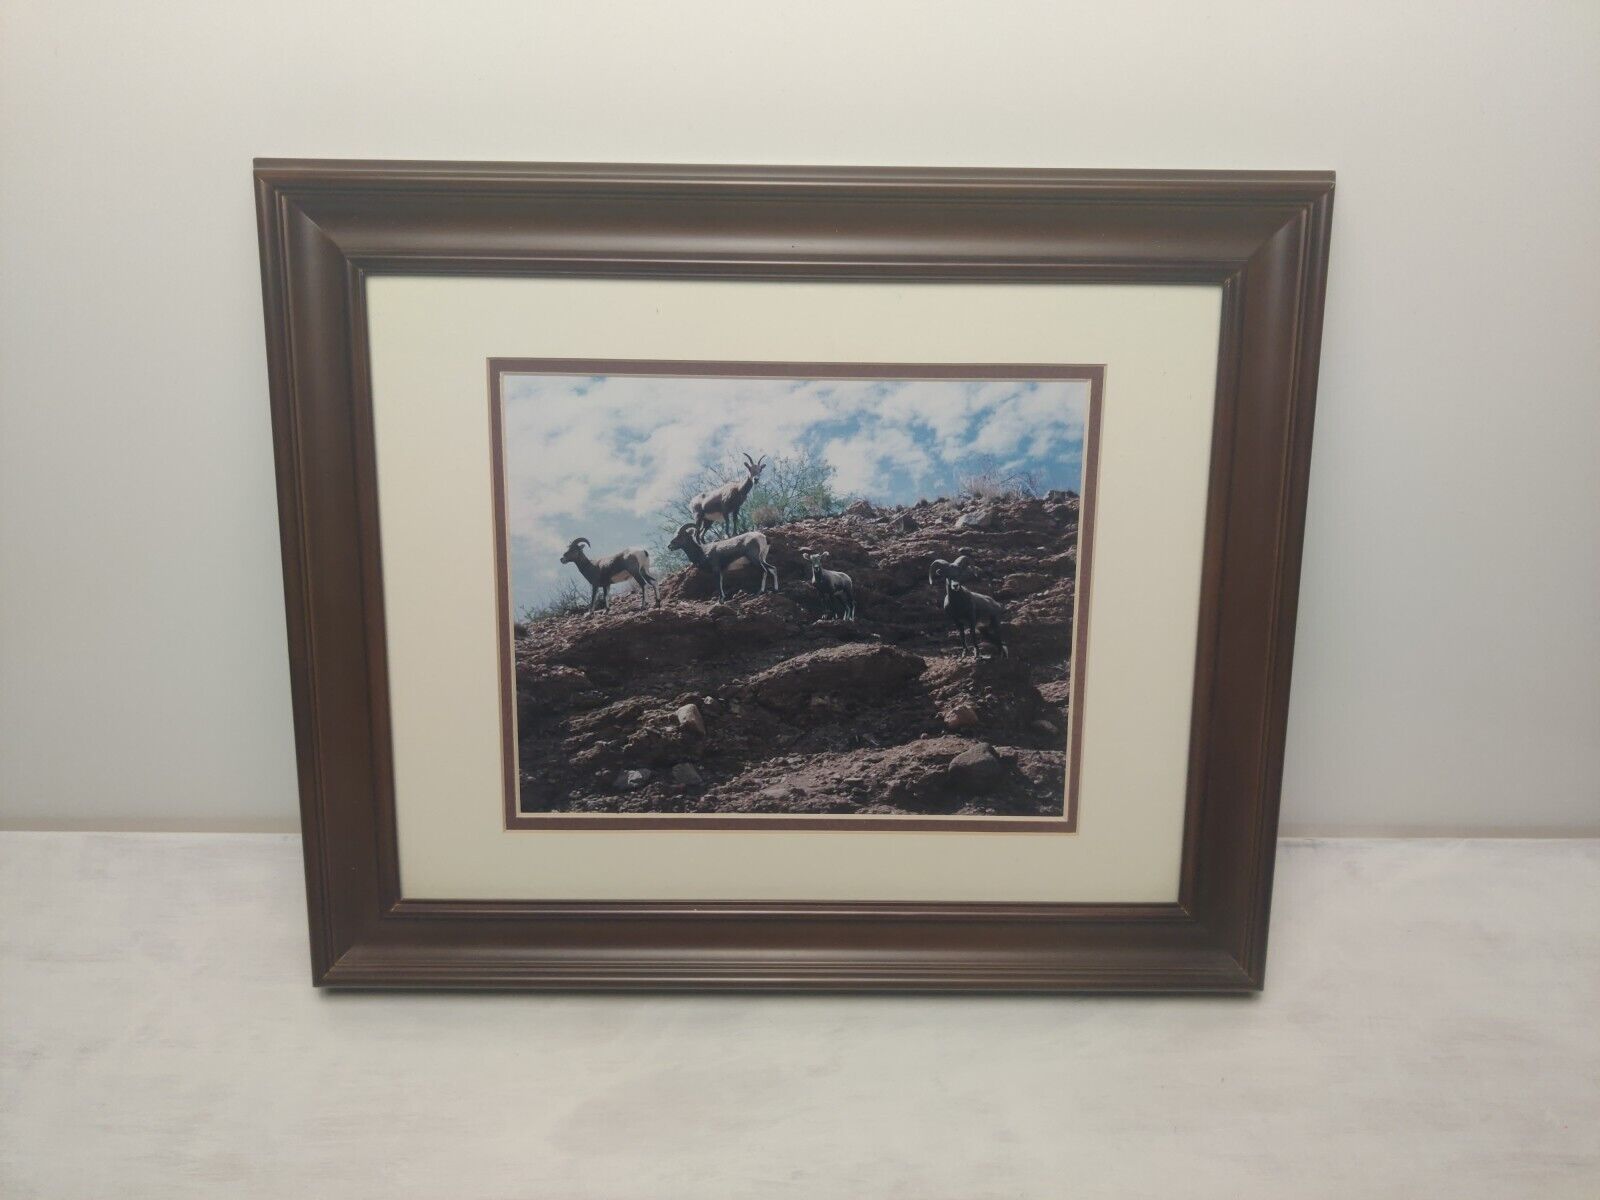 MOUNTAIN GOATS in the Desert Photograph Framed